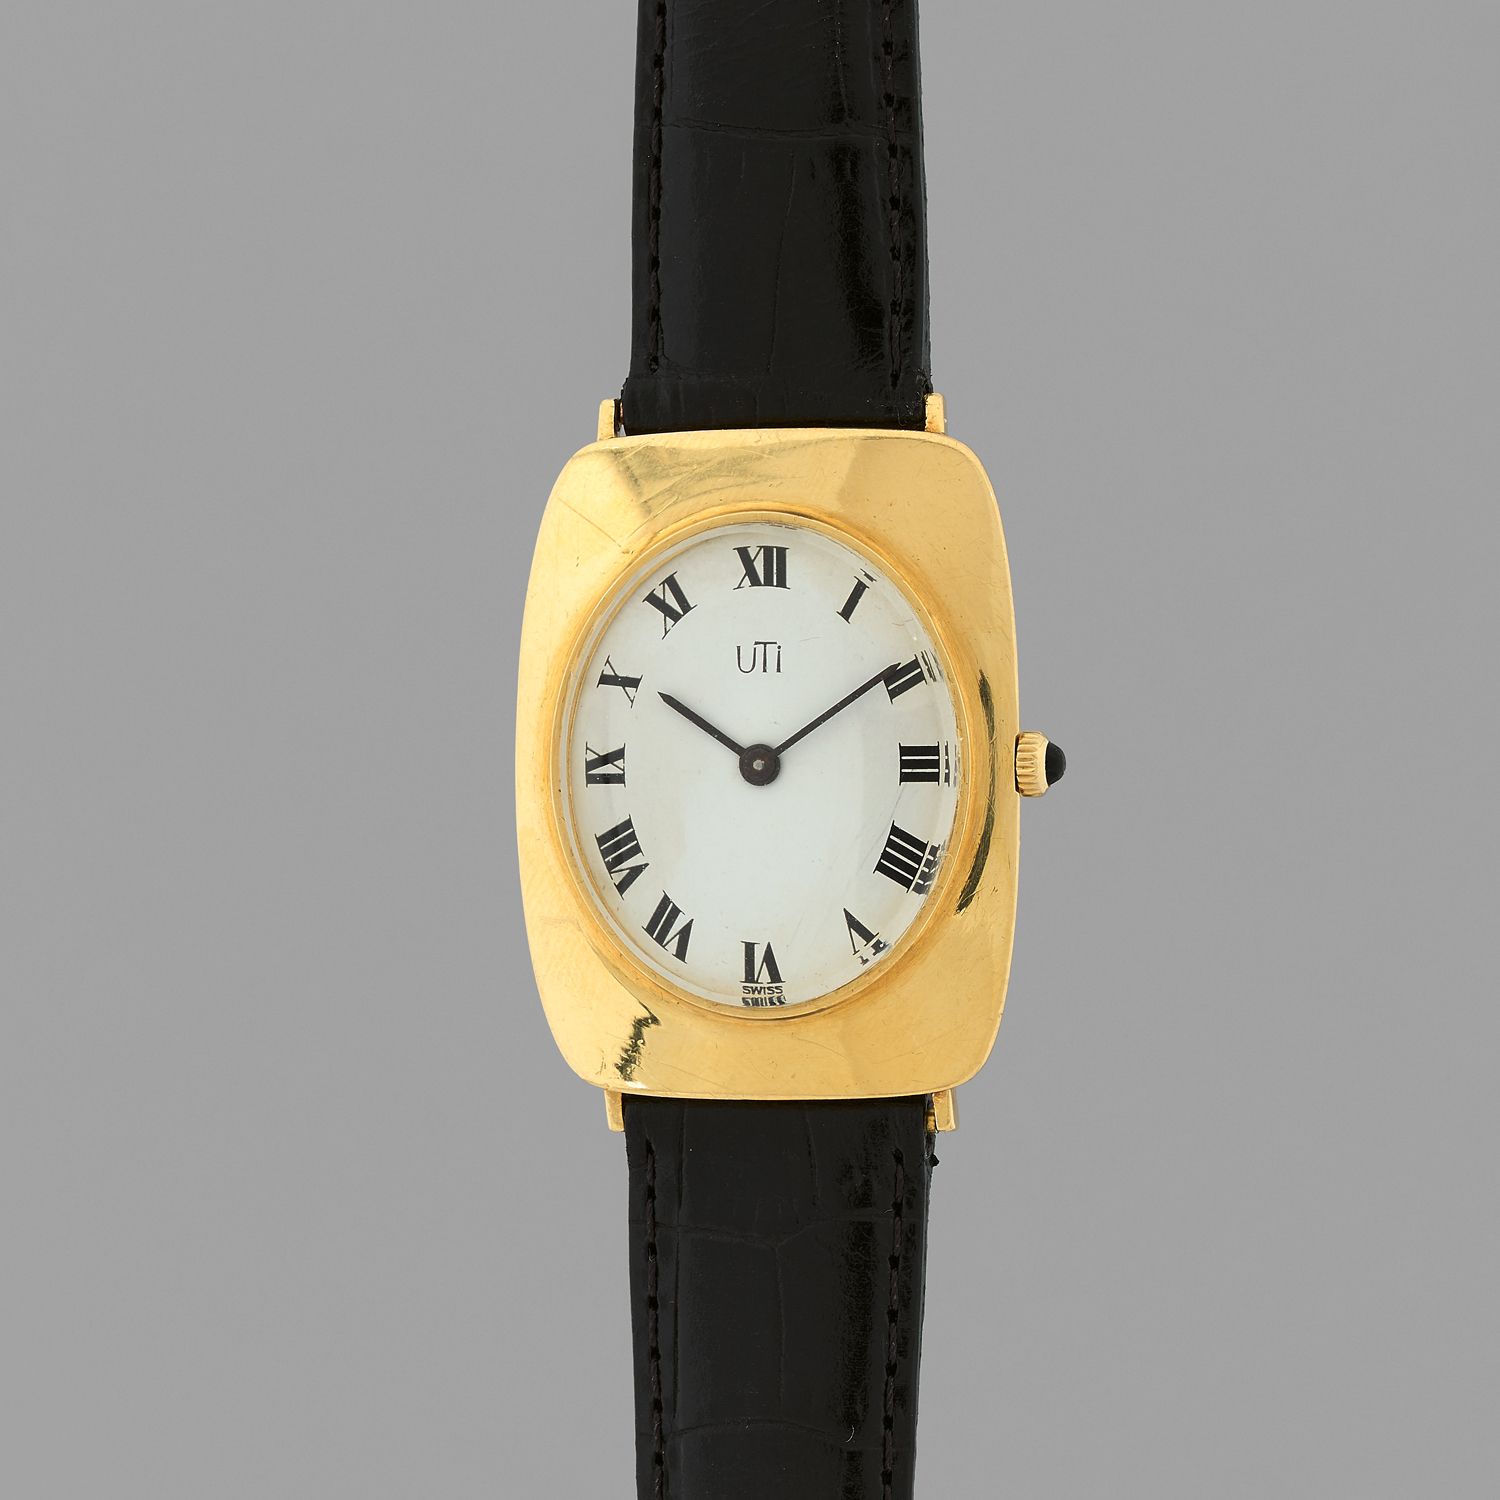 Null UTI
Discovolante.
Vers: 1970.
Montre bracelet en or jaune 750/1000, cadran &hellip;